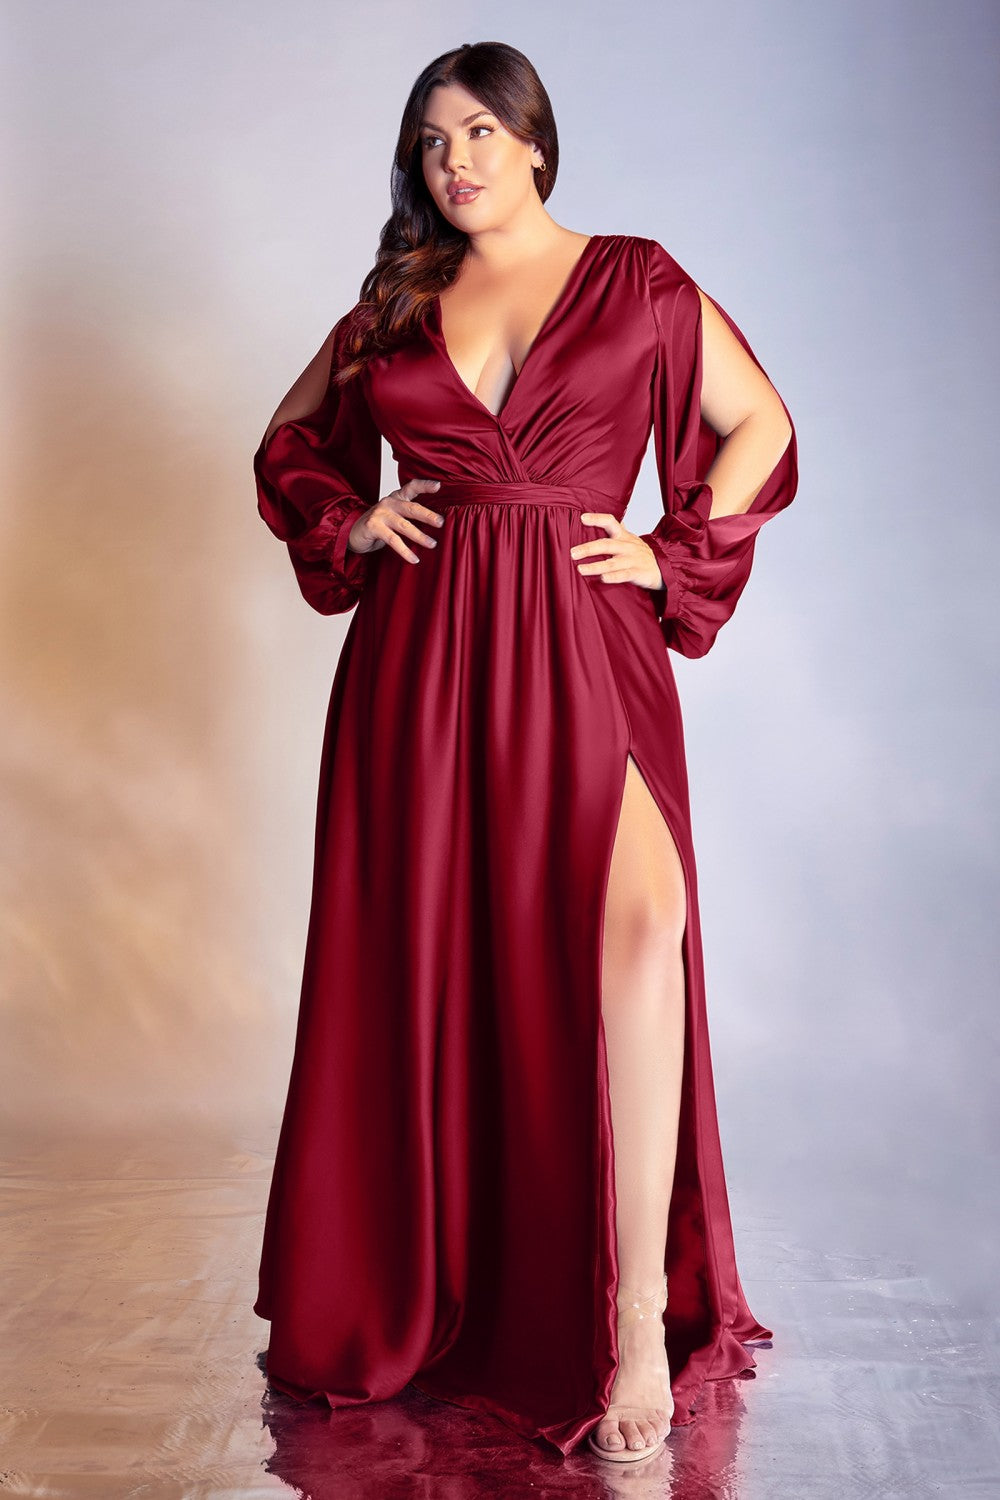 Doreen Long Sleeve Bridesmaid Dress in Burgundy Doreen 7407475KK-Burgundy